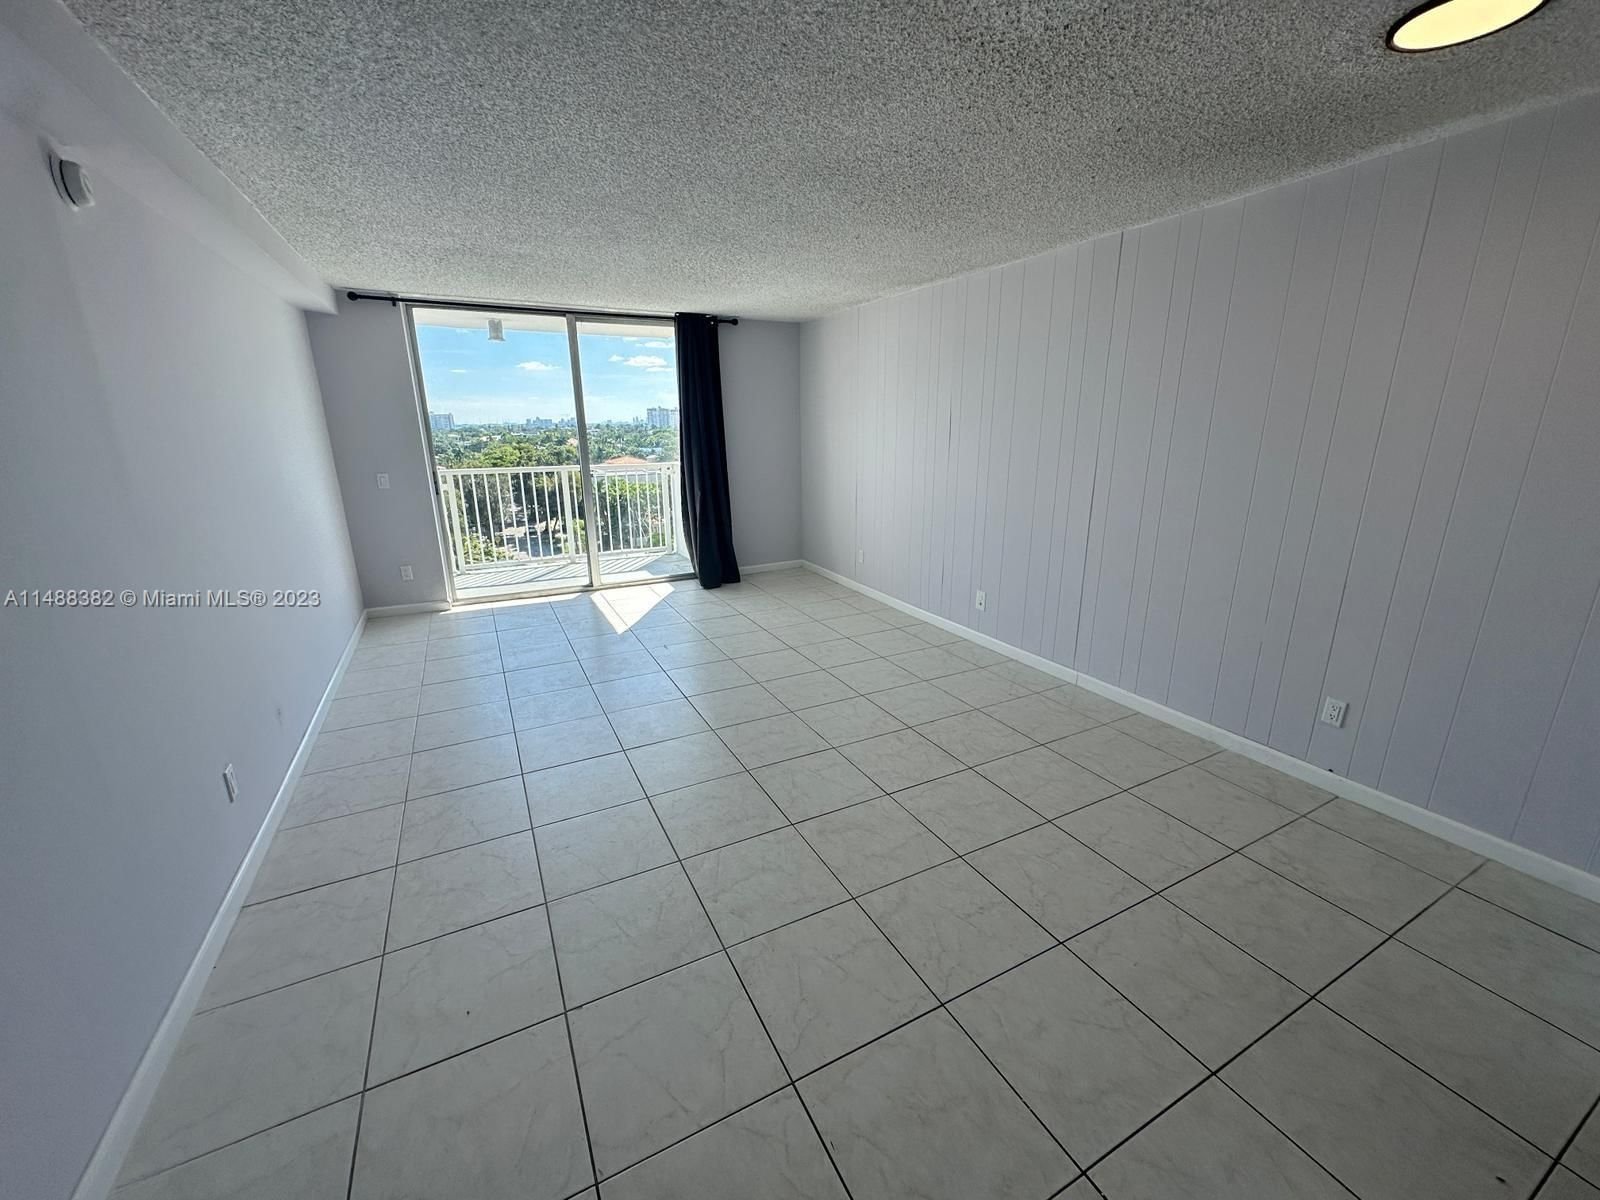 Real estate property located at 2020 135th St #808, Miami-Dade County, KEYSTONE TOWERS CONDO, North Miami, FL